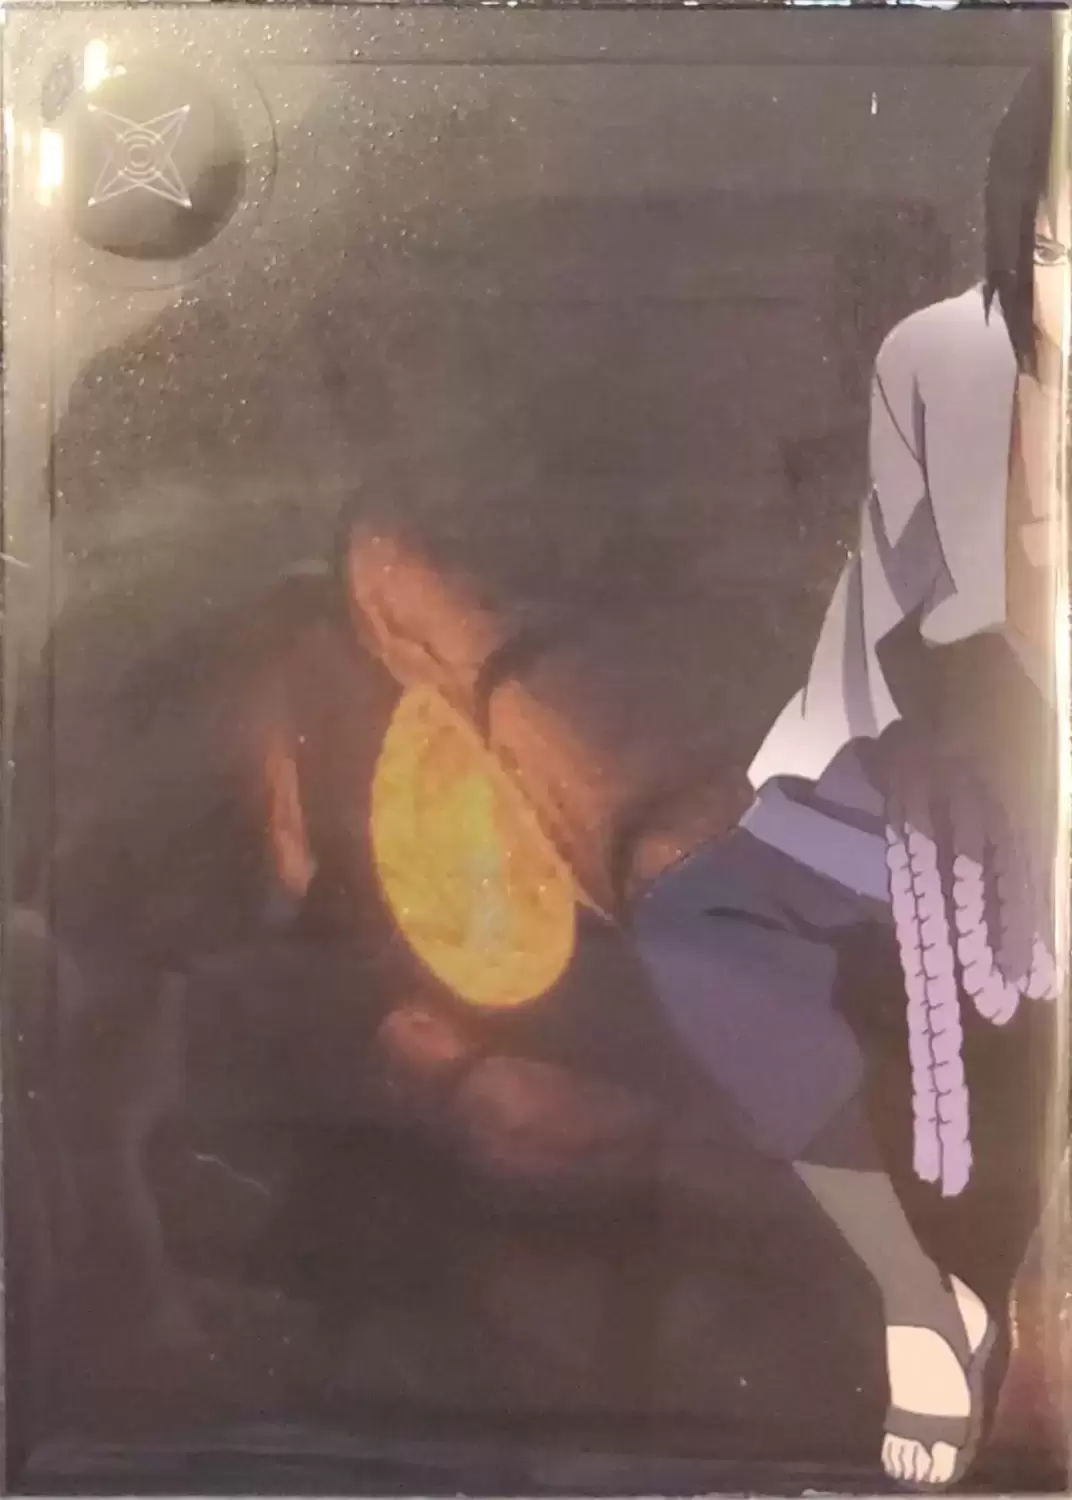 Naruto Shippuden - Hokage trading card collection (2022) - Sasuke